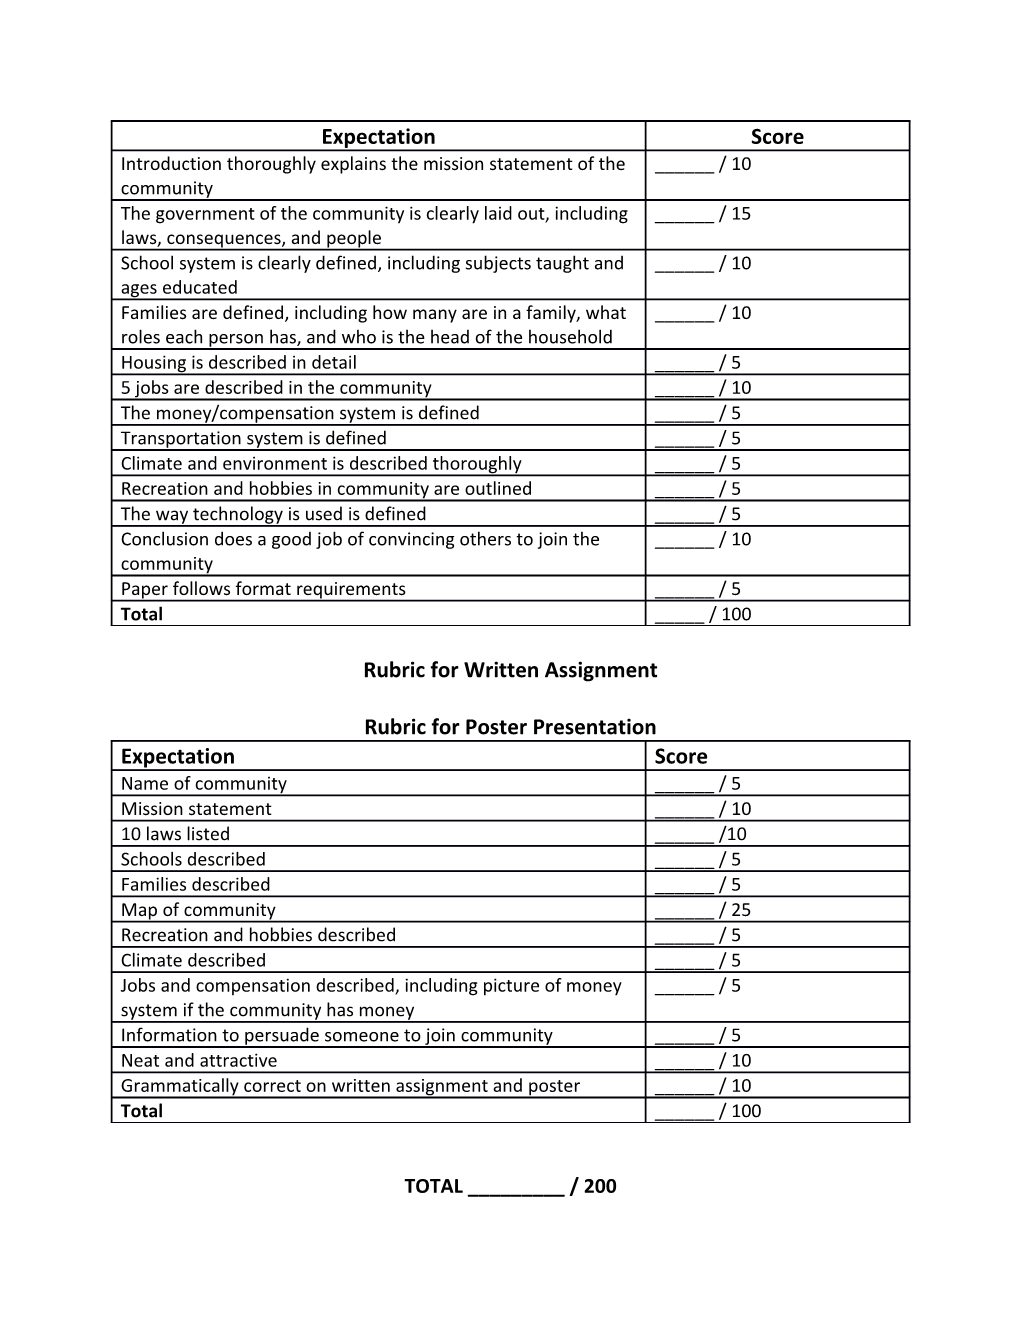 Rubric for Written Assignment